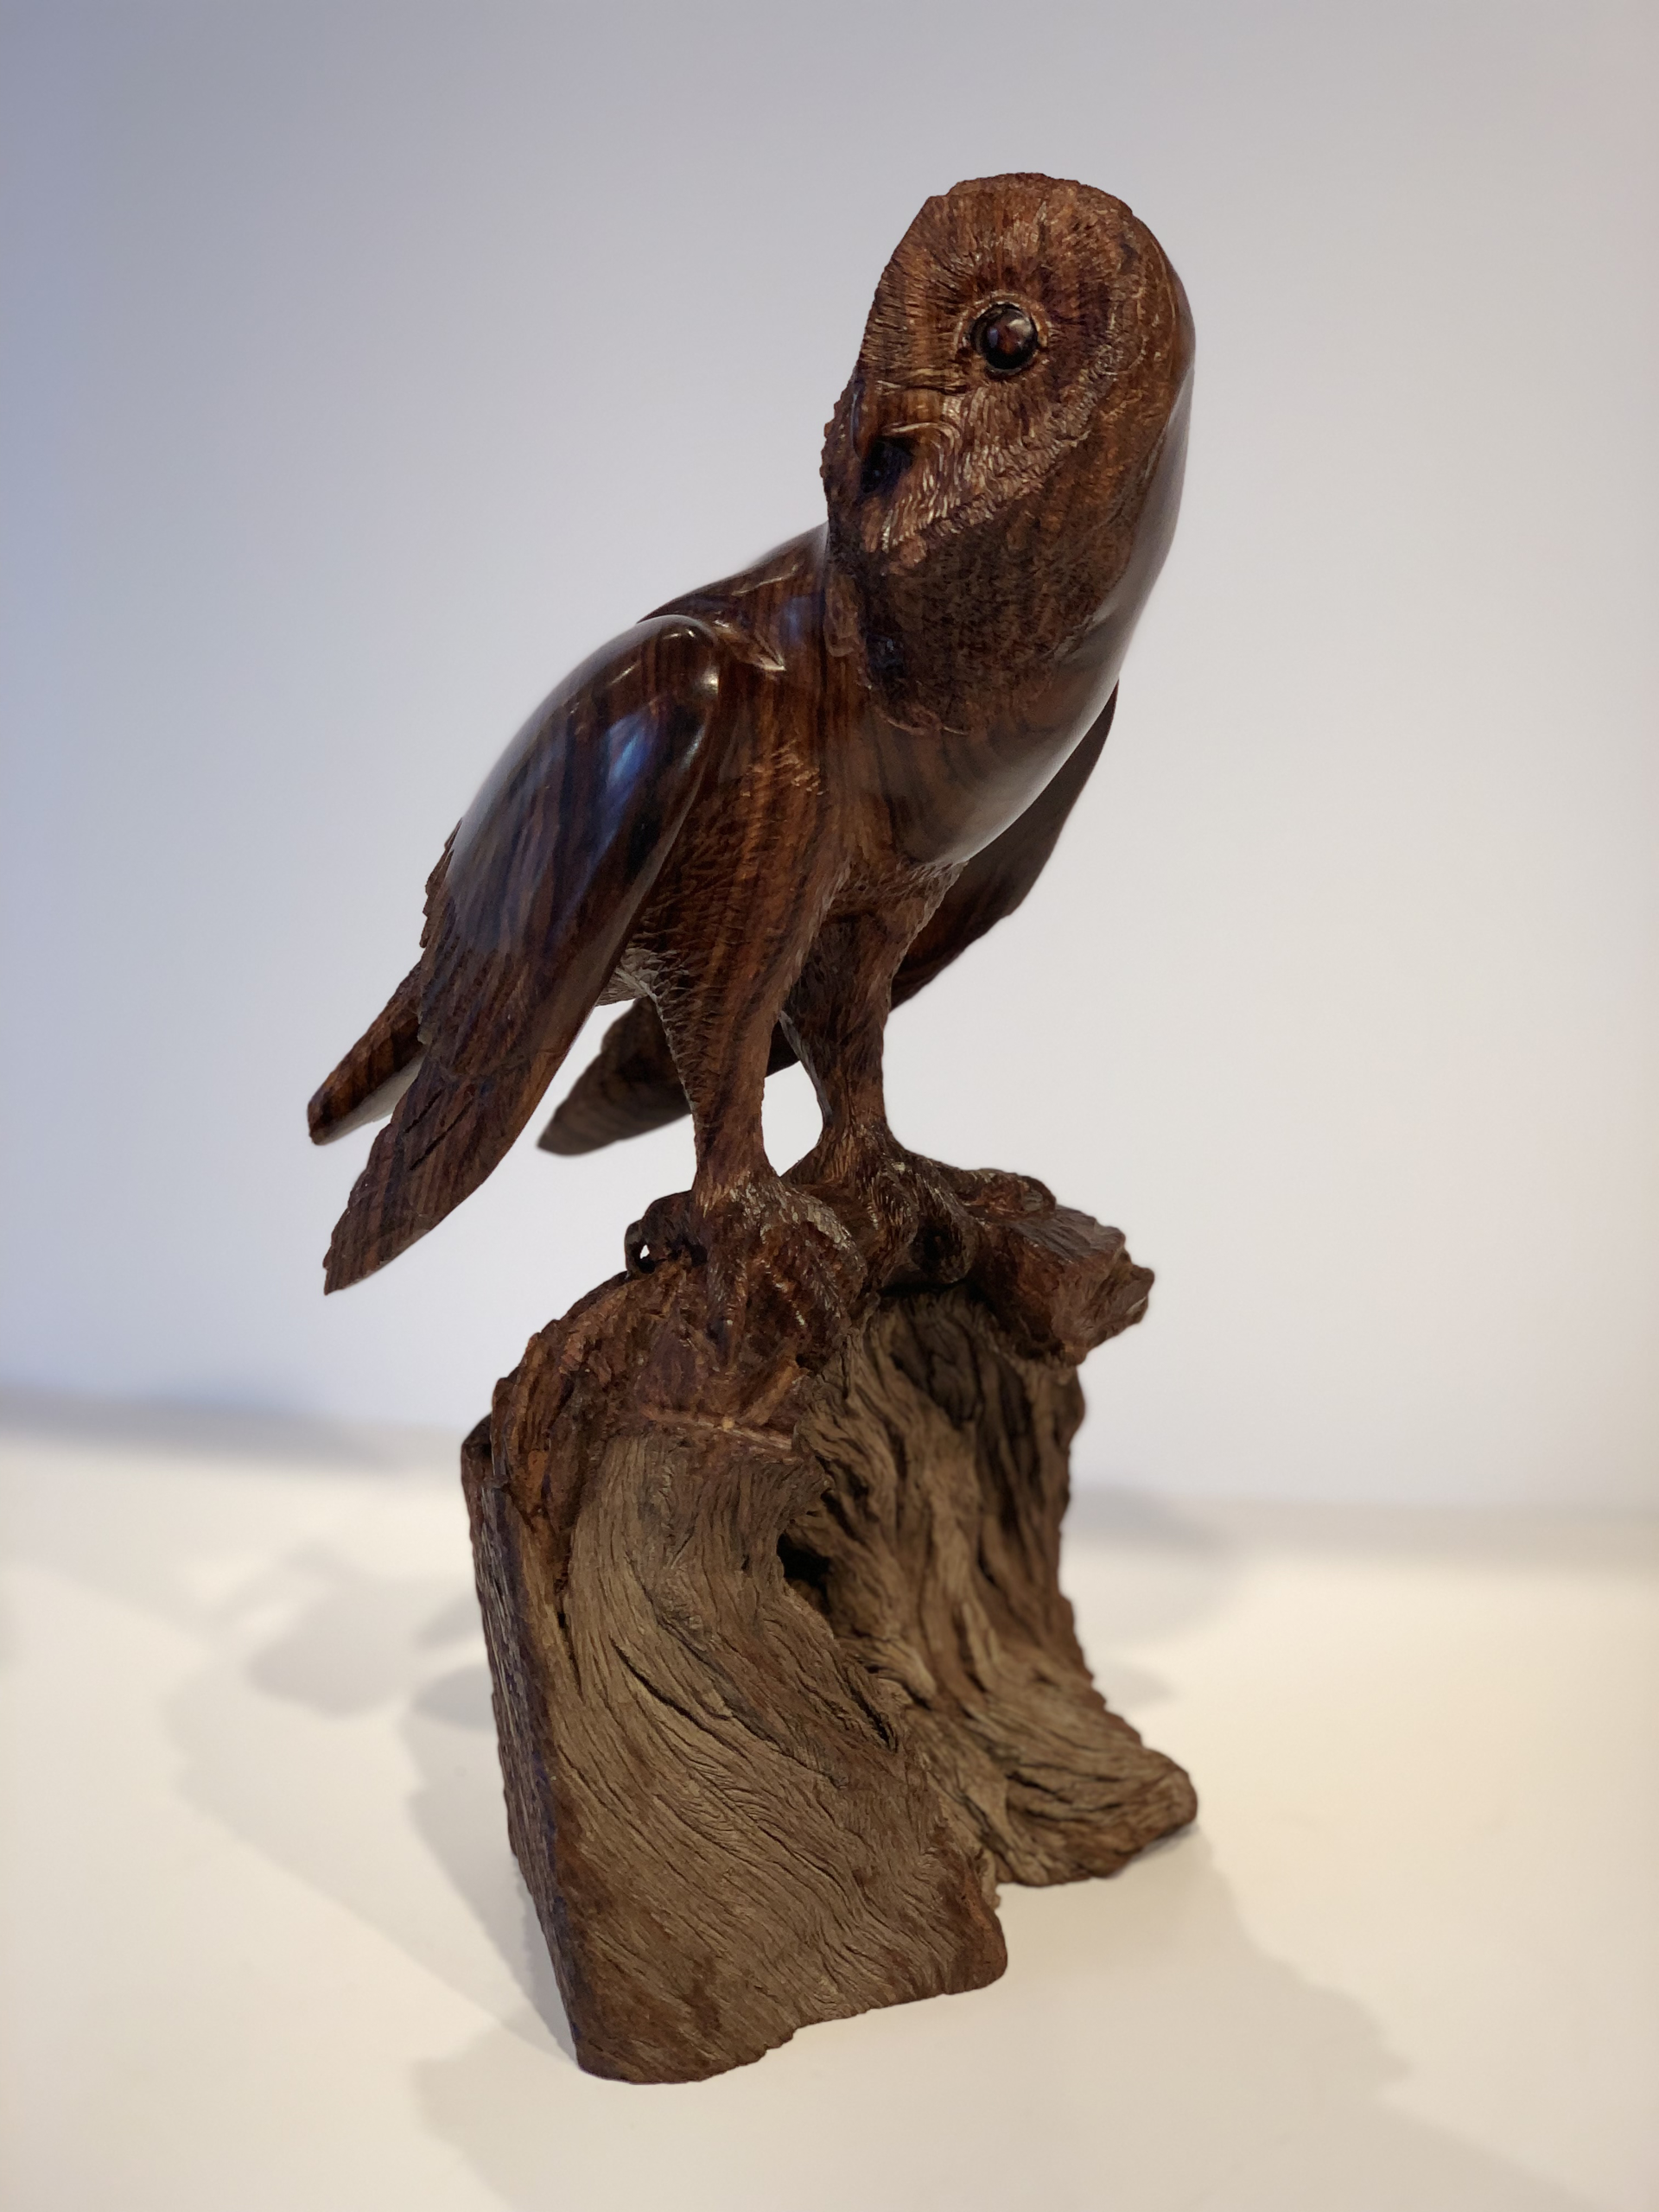 Barn Owl by Thomas Suby